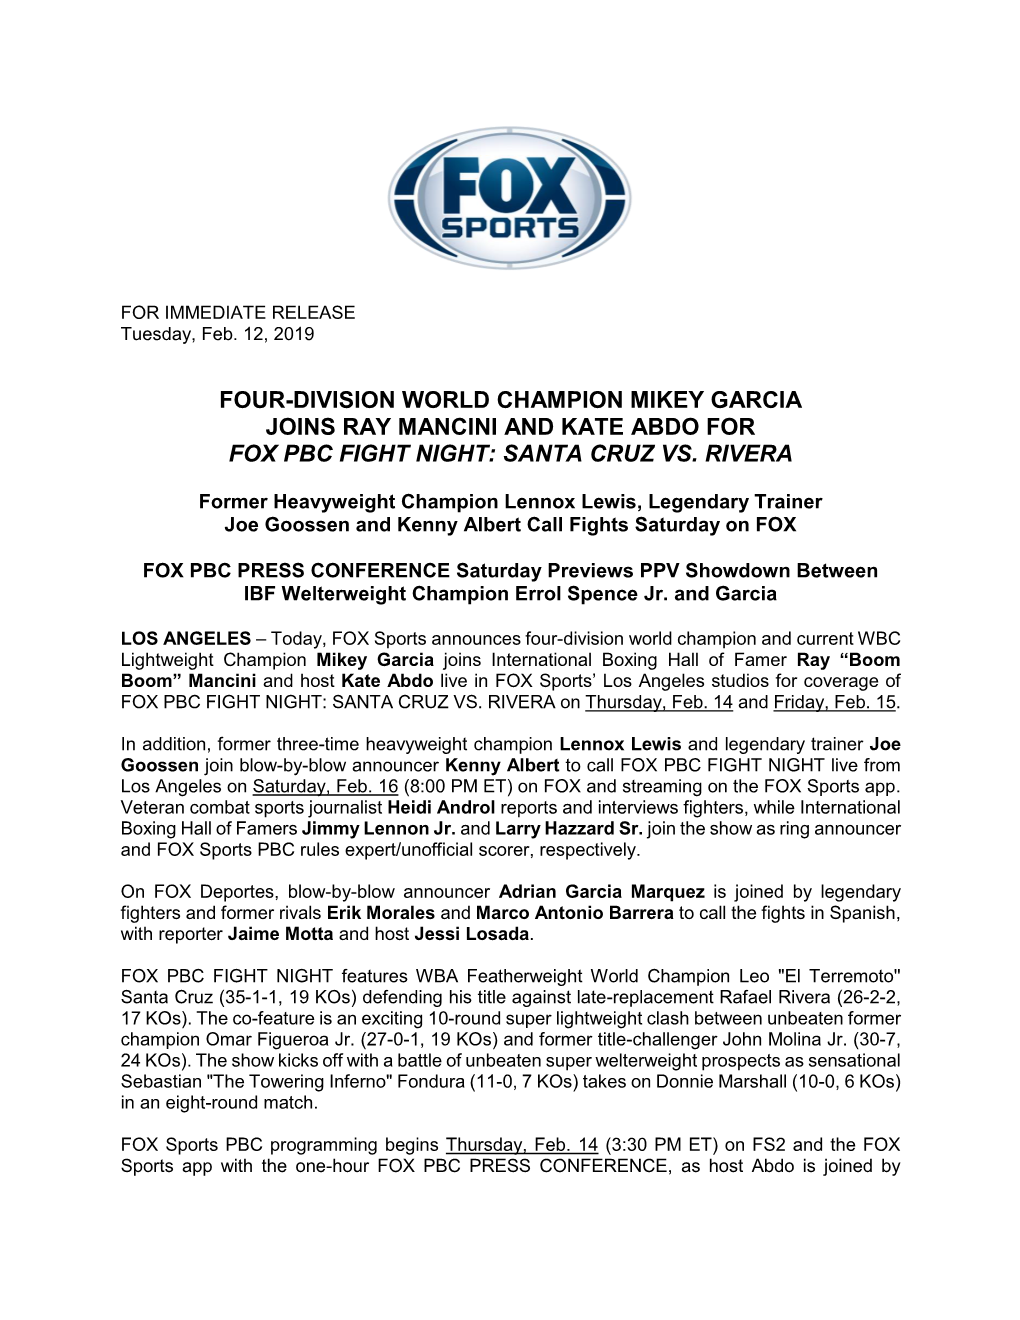 Four-Division World Champion Mikey Garcia Joins Ray Mancini and Kate Abdo for Fox Pbc Fight Night: Santa Cruz Vs